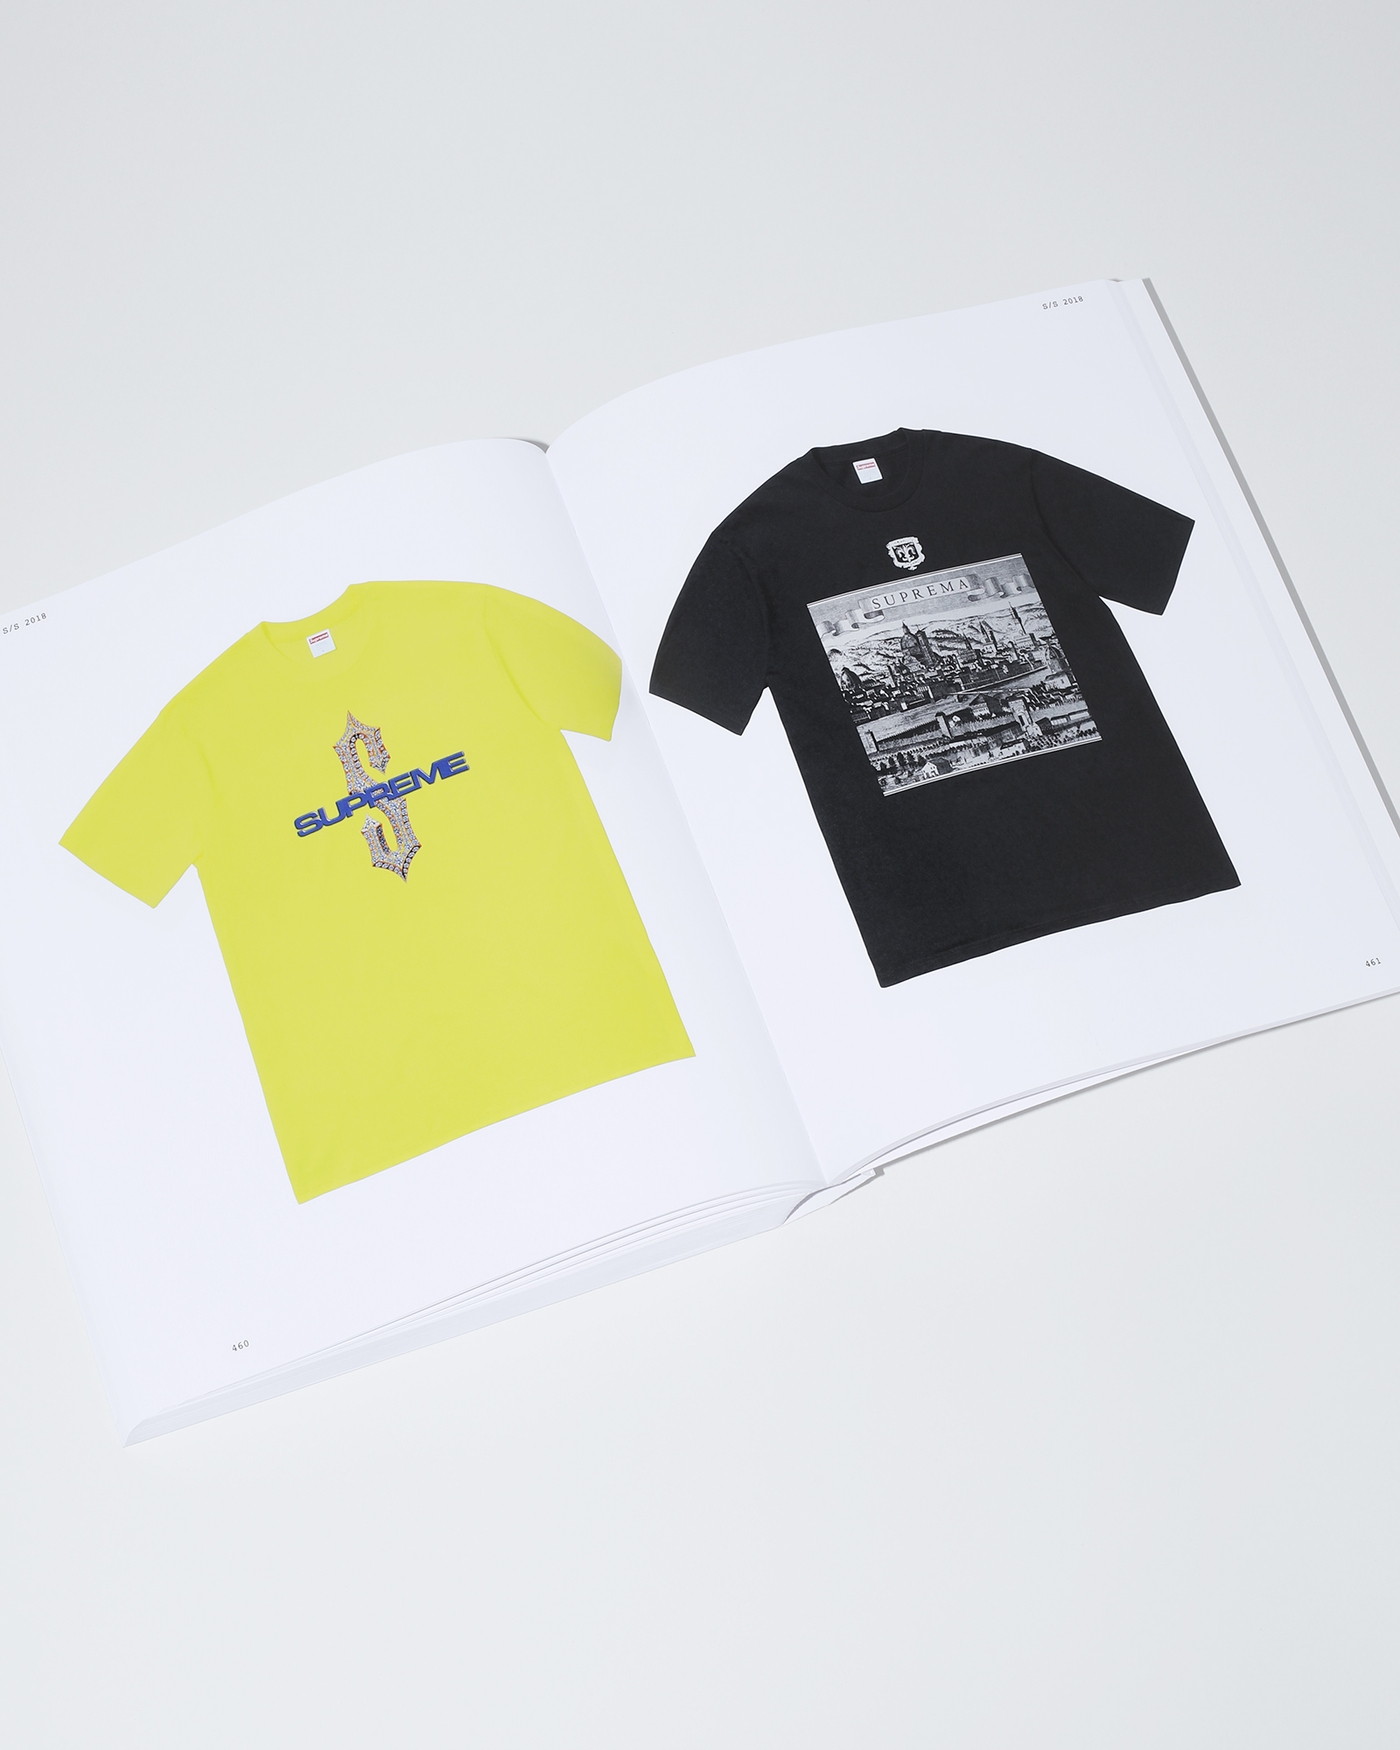 Supreme 30 Years: T-Shirts 1994-2024 Book (13/18)